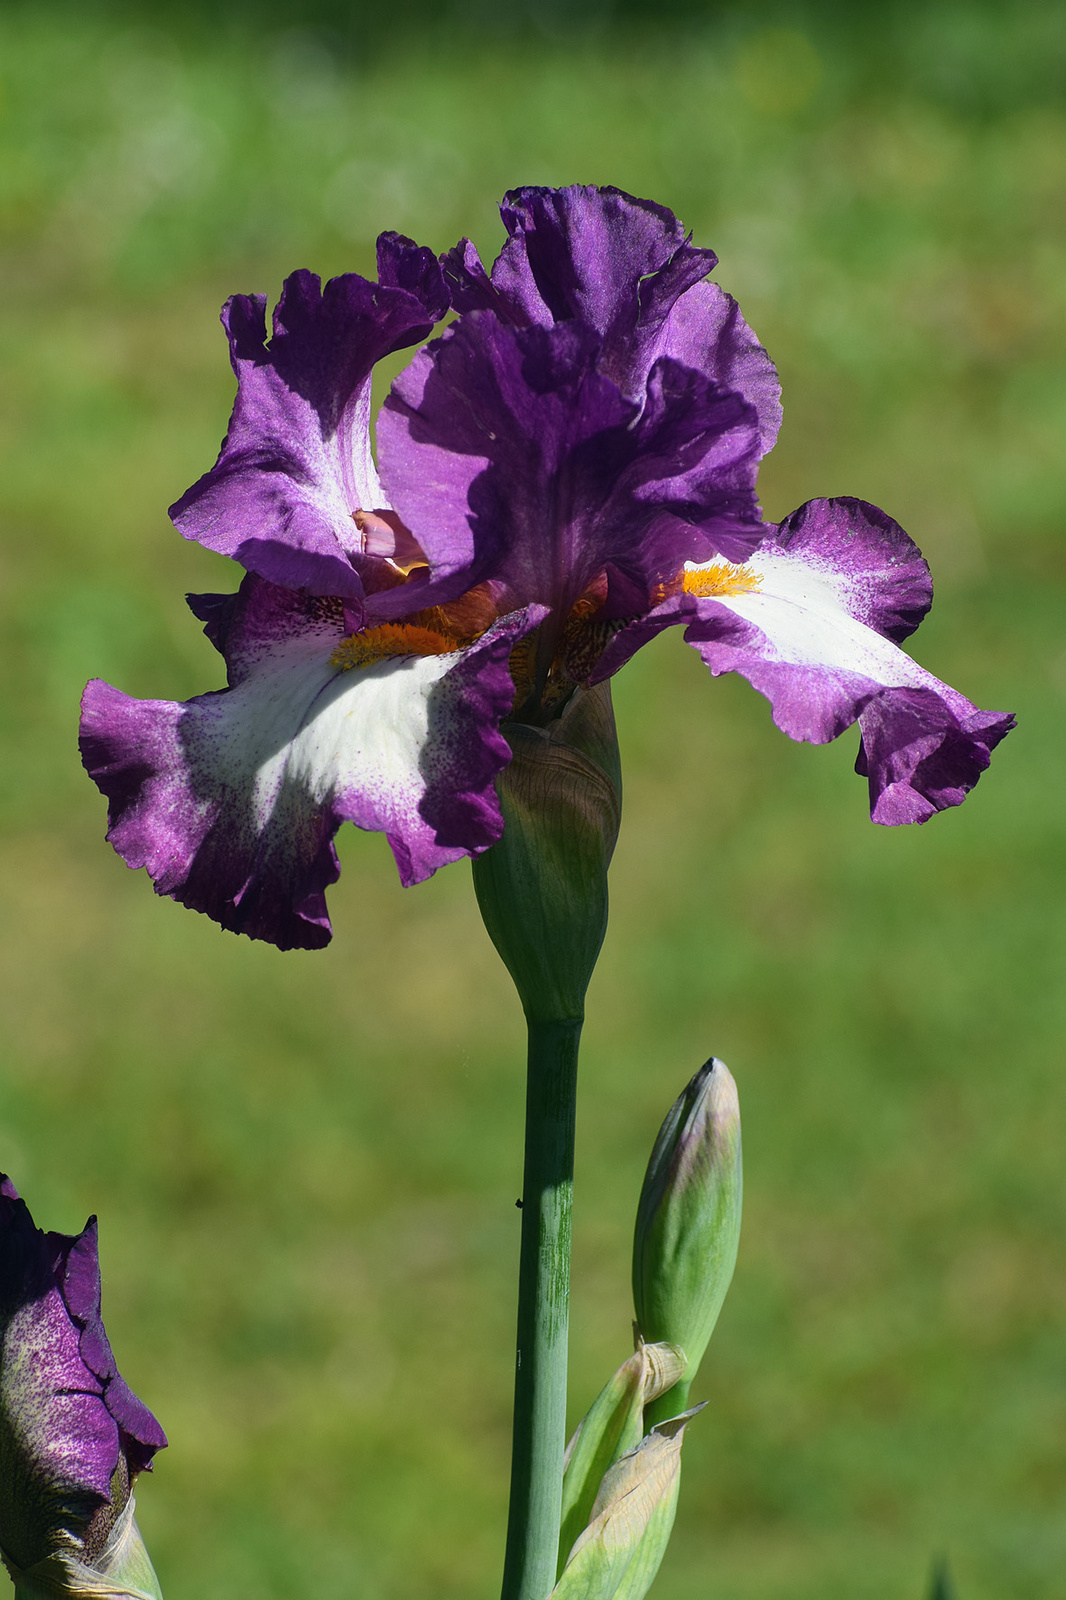 Nőszirom-Iris sp (6)